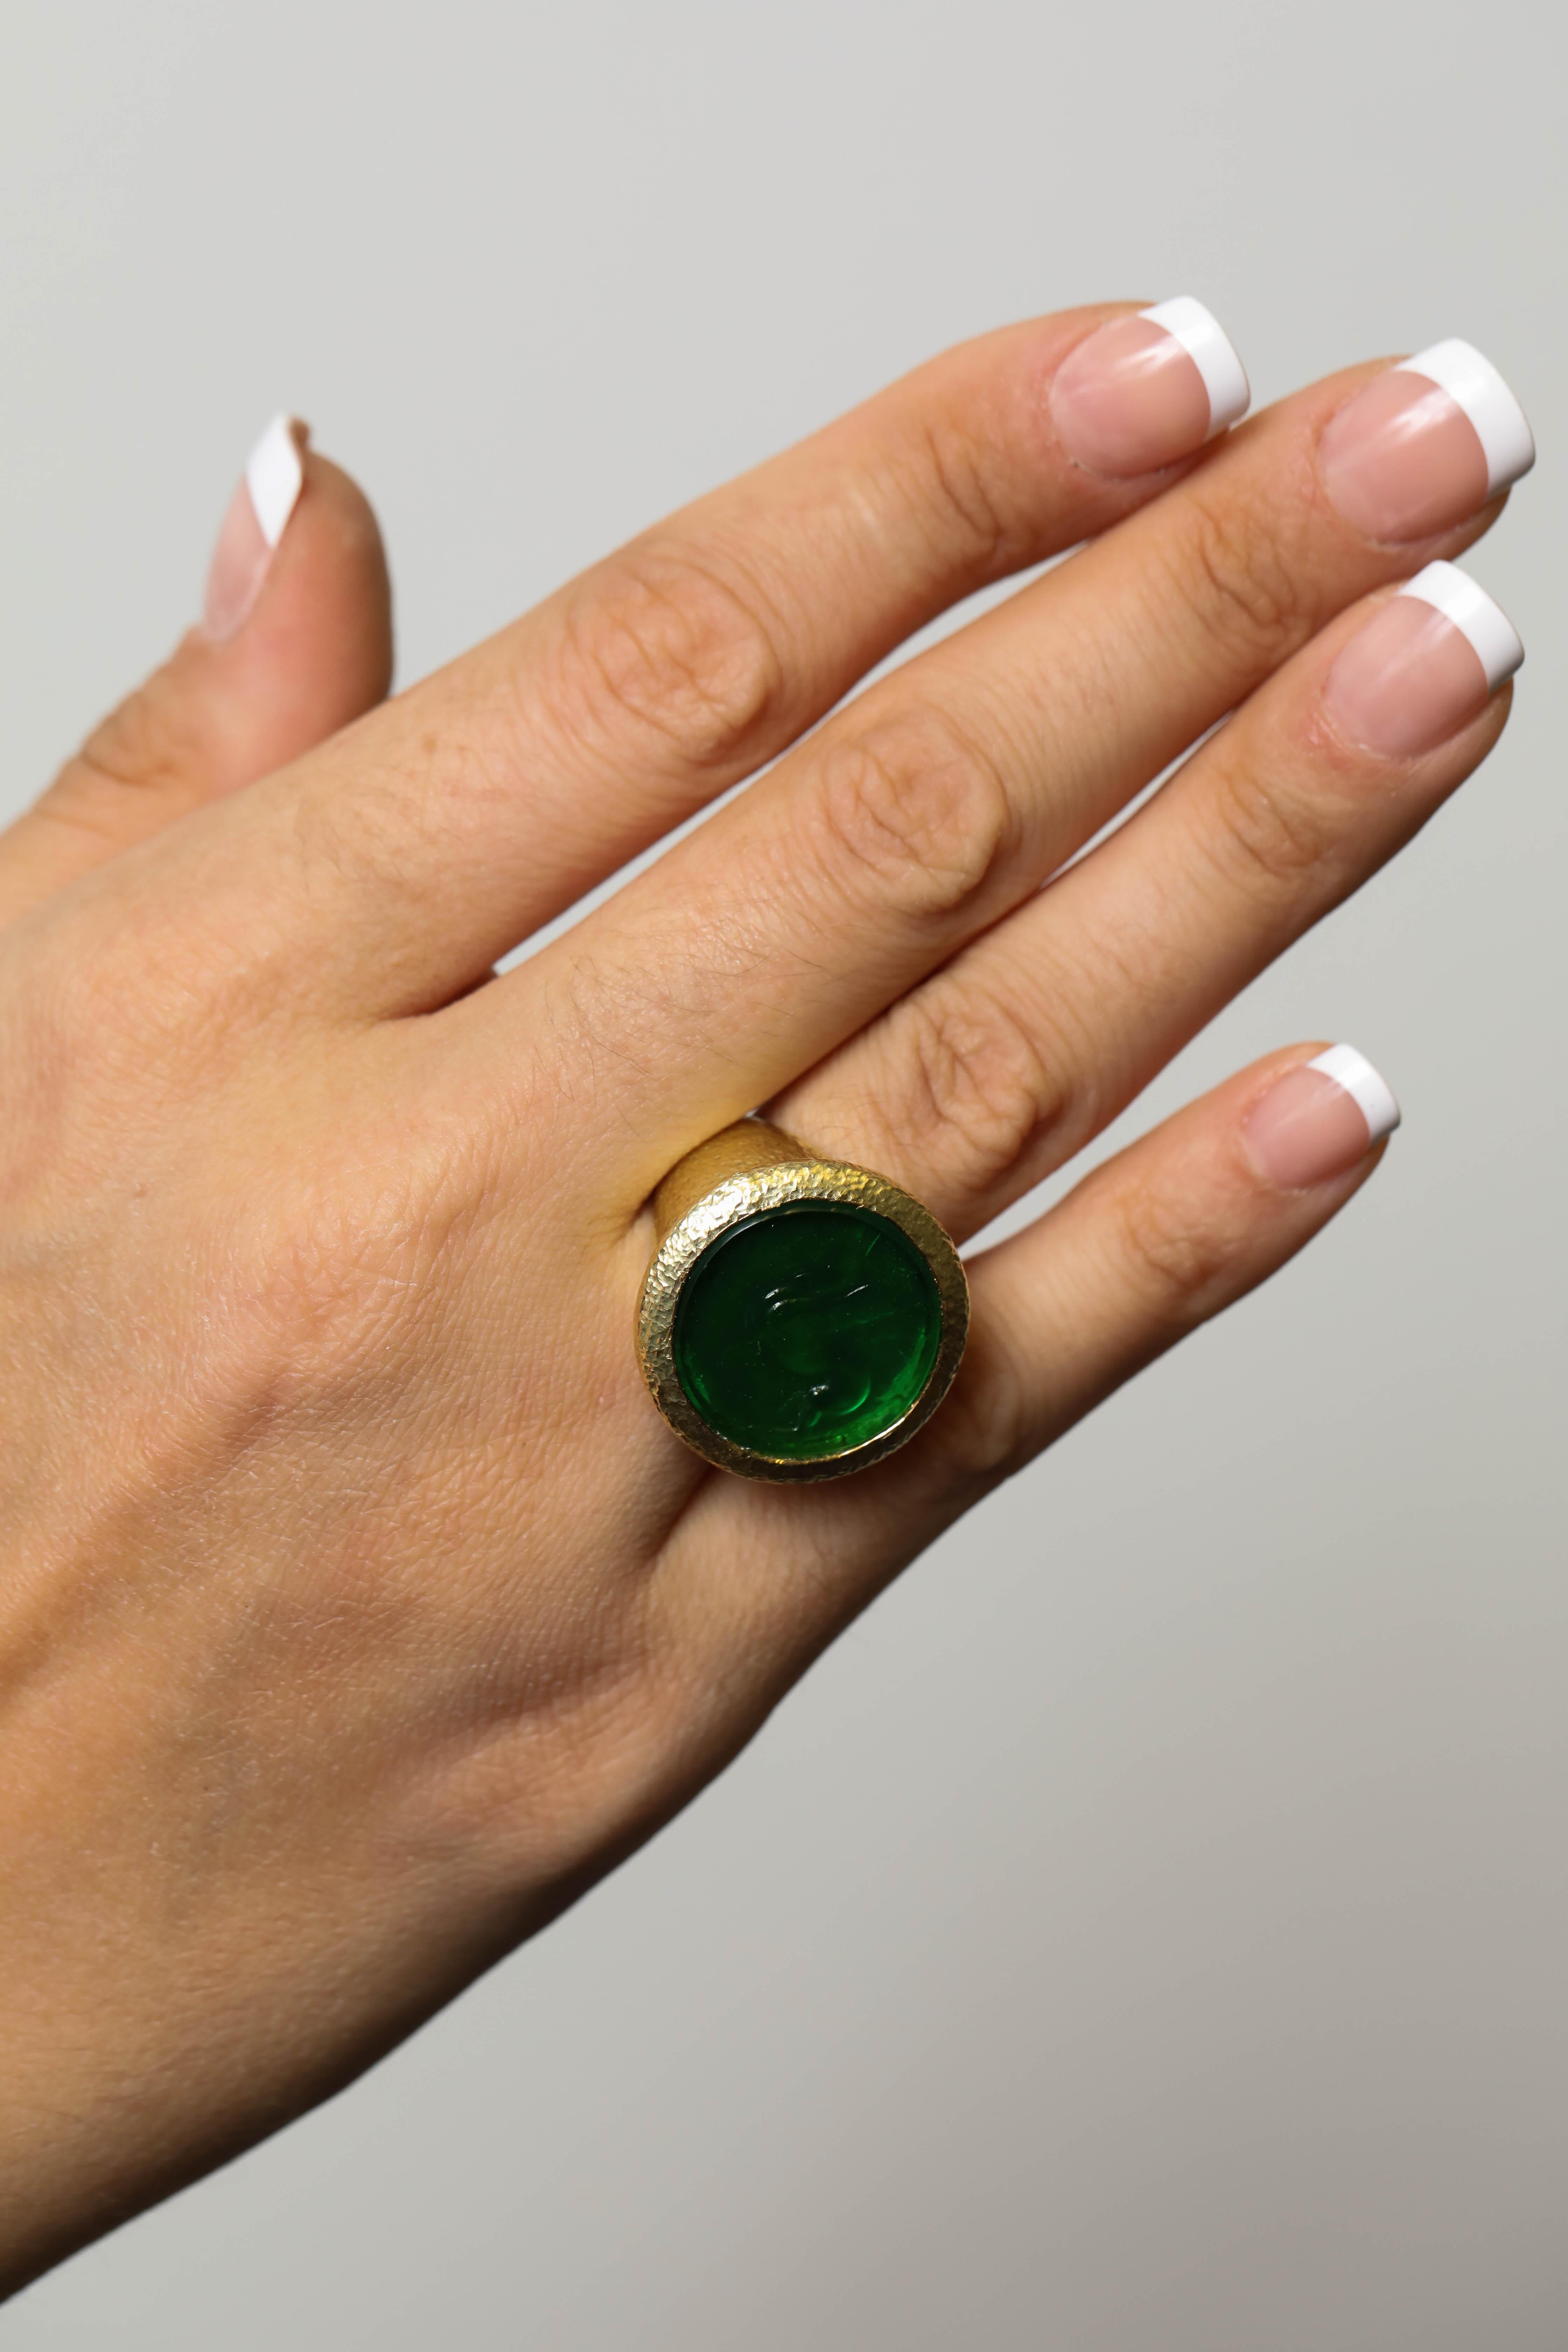 Cabochon New Victorian Green Italian Murano Glass Carved Intaglio Ring 18 Karat Gold